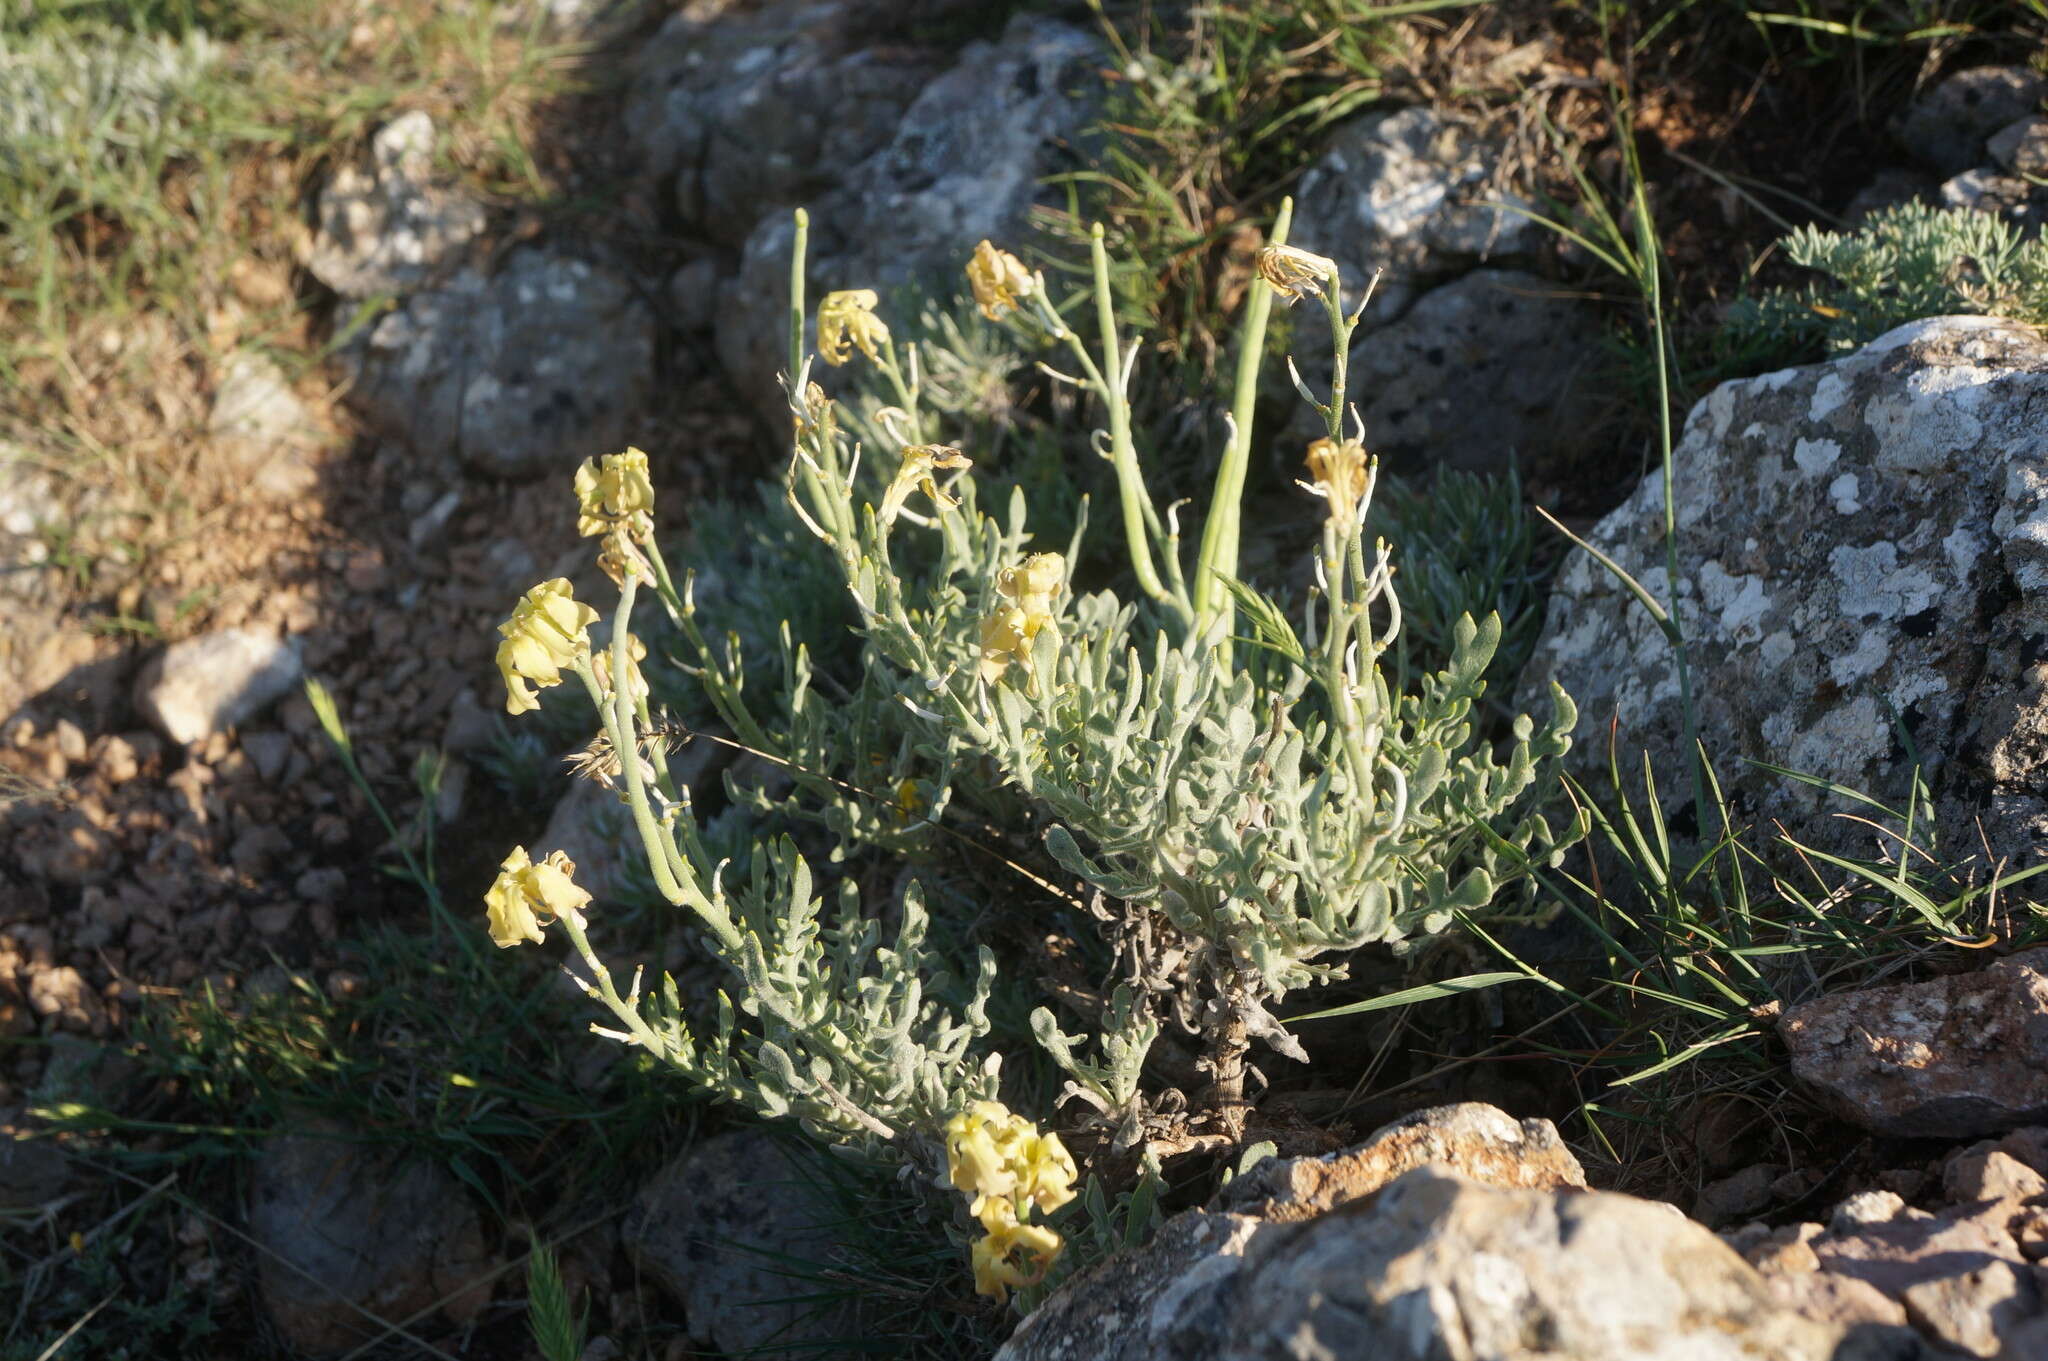 Image of Matthiola odoratissima (Pall. ex M. Bieb.) W. T. Aiton